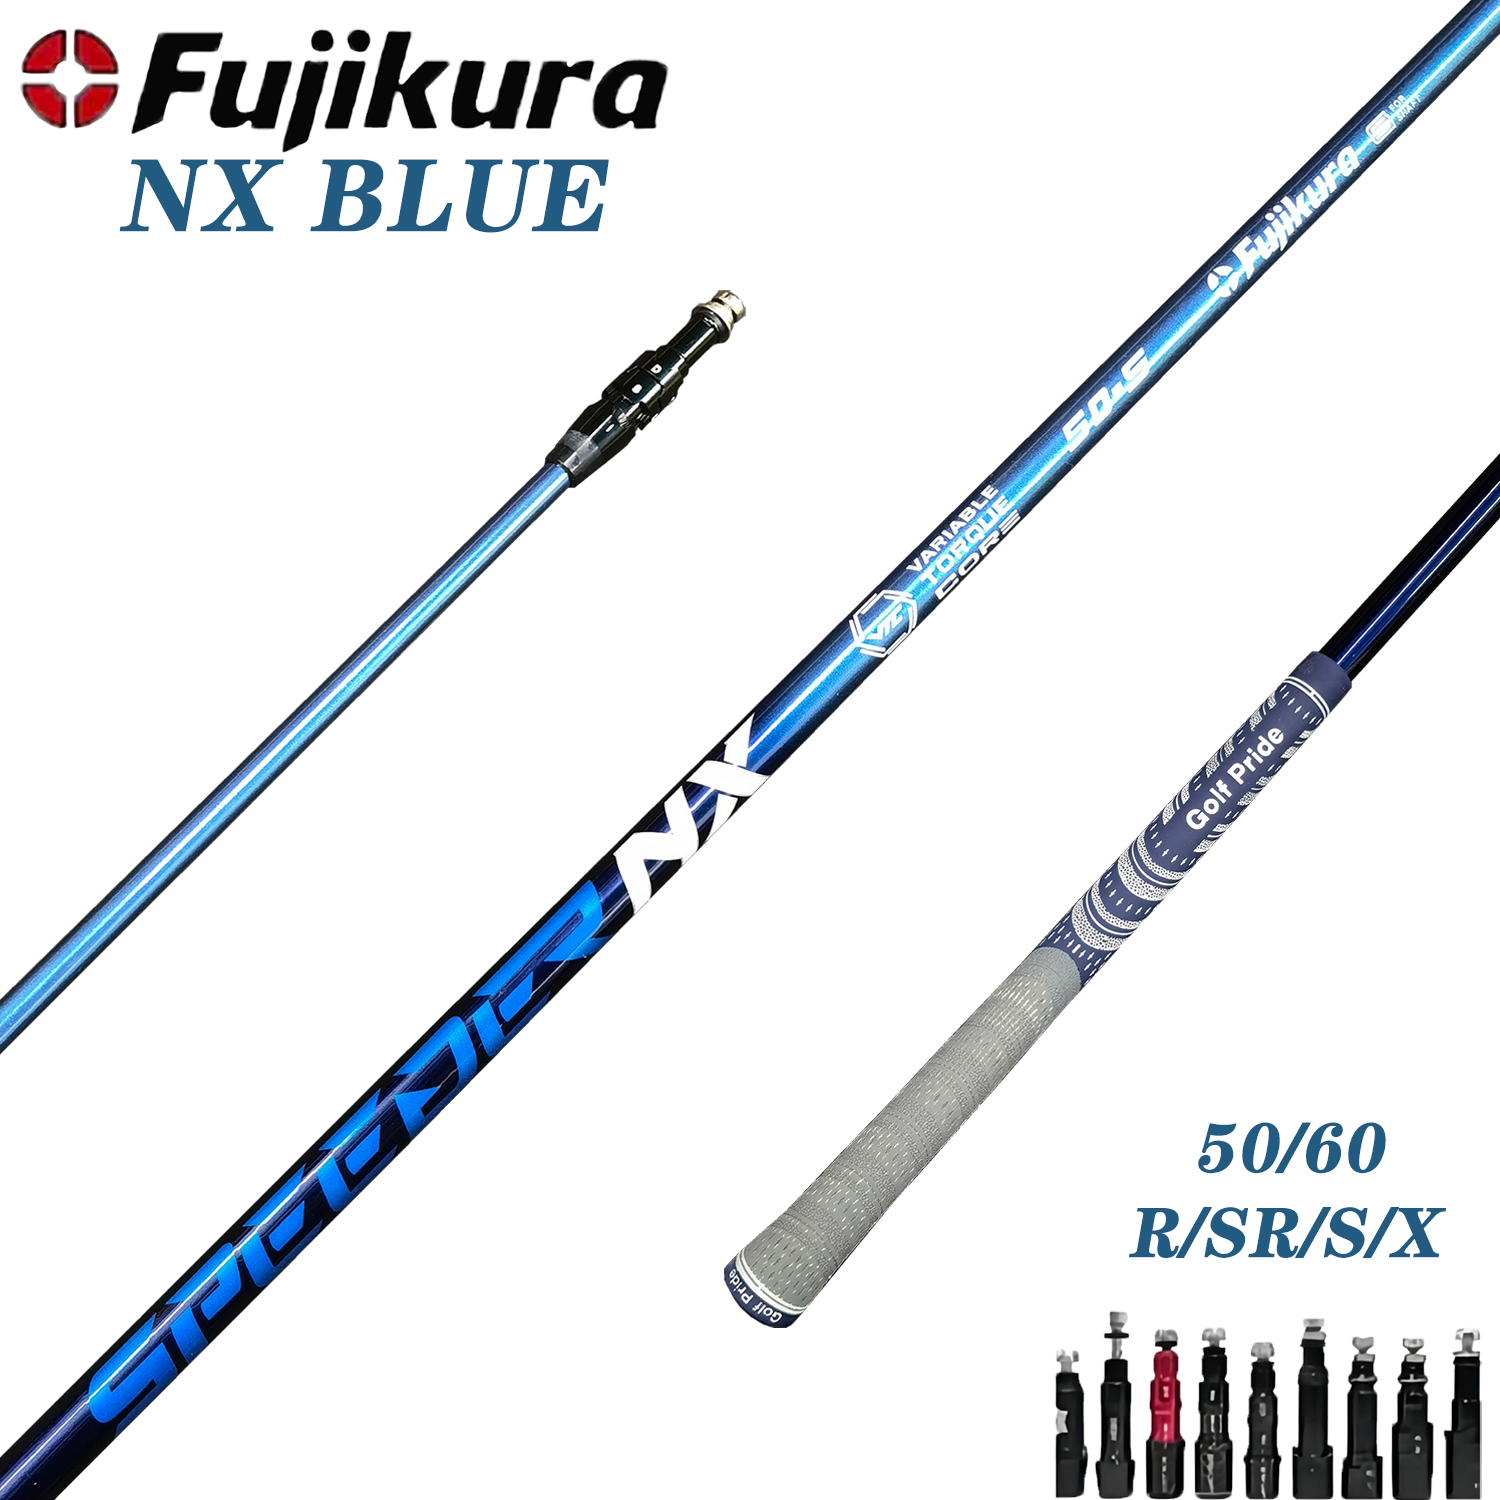 Anpassningsbar golfsaxel - Fujikura Speeder NX 50/60 Blue, Club Shafts - 0,335 tips - S, R, X Flex Options - Gratis monteringshylsa GRIP